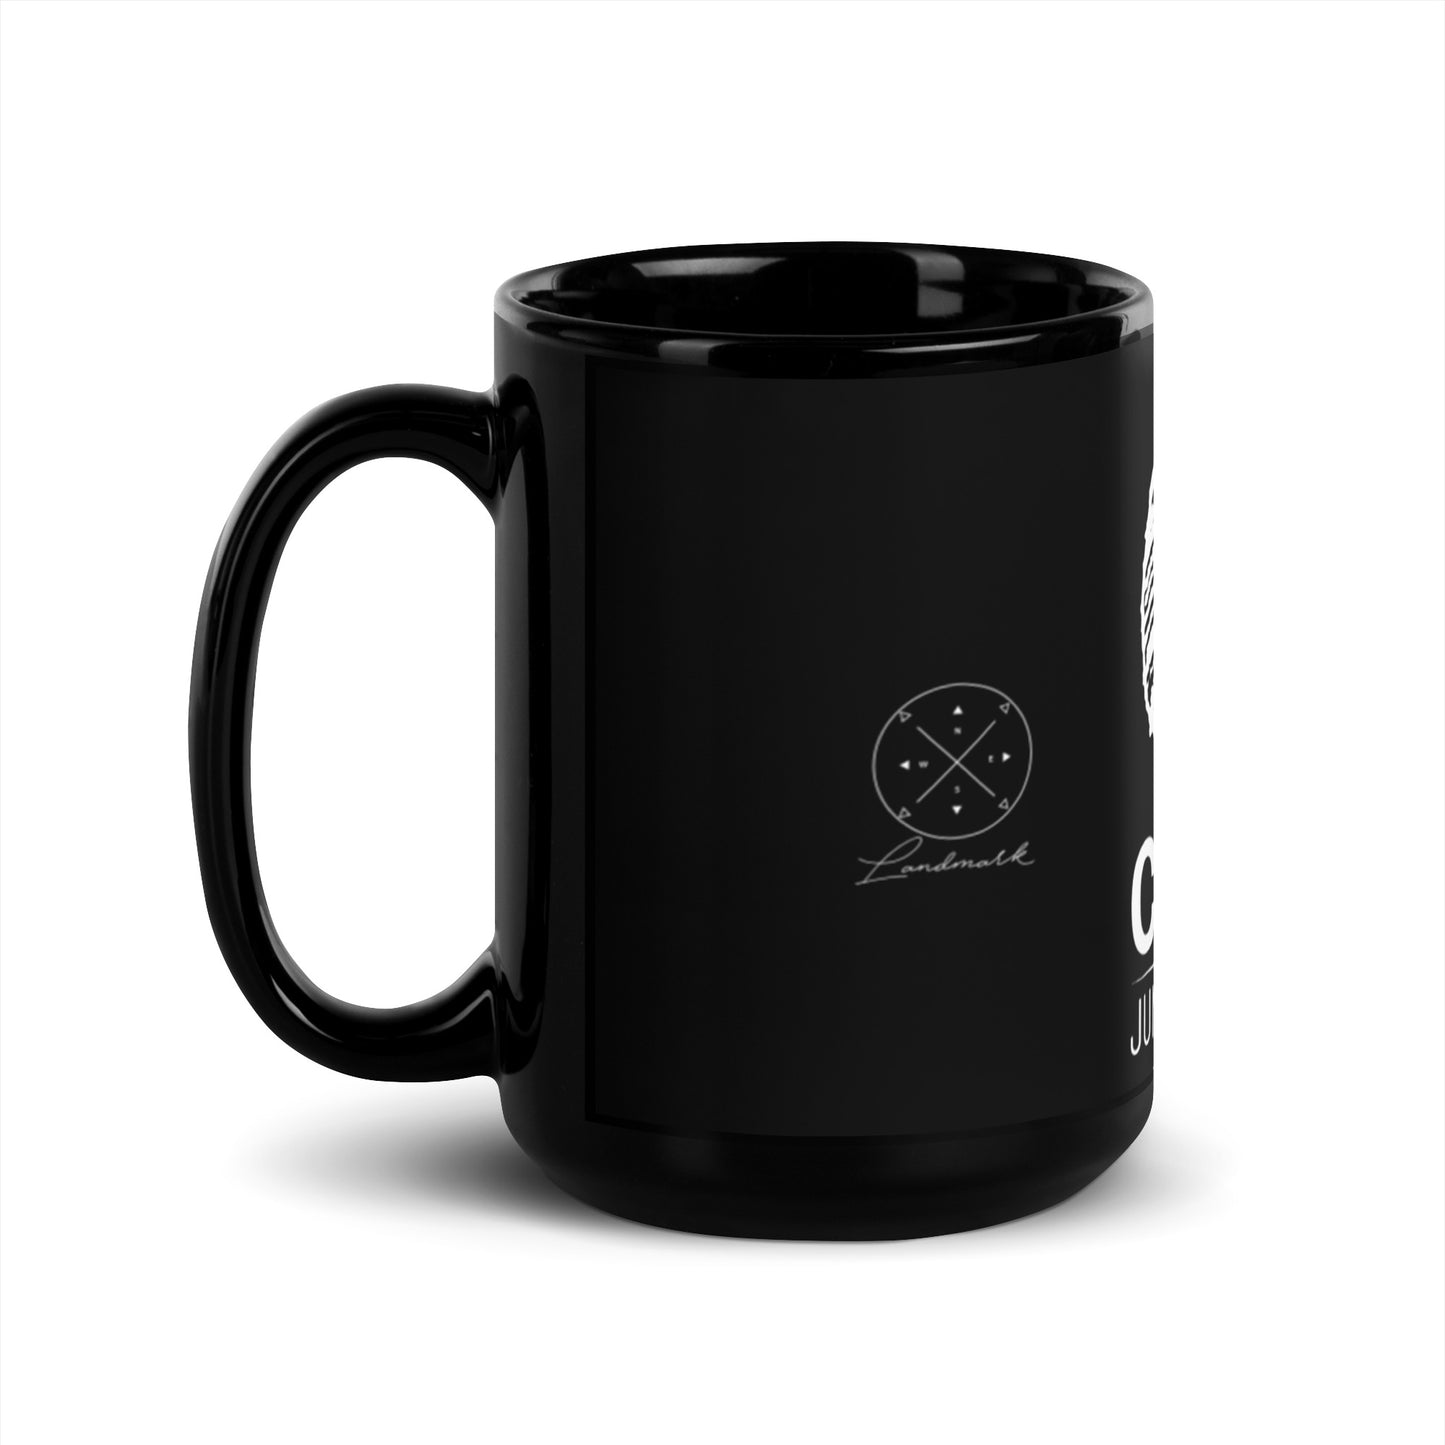 Cincy Juncta Juvant - Black Glossy Mug